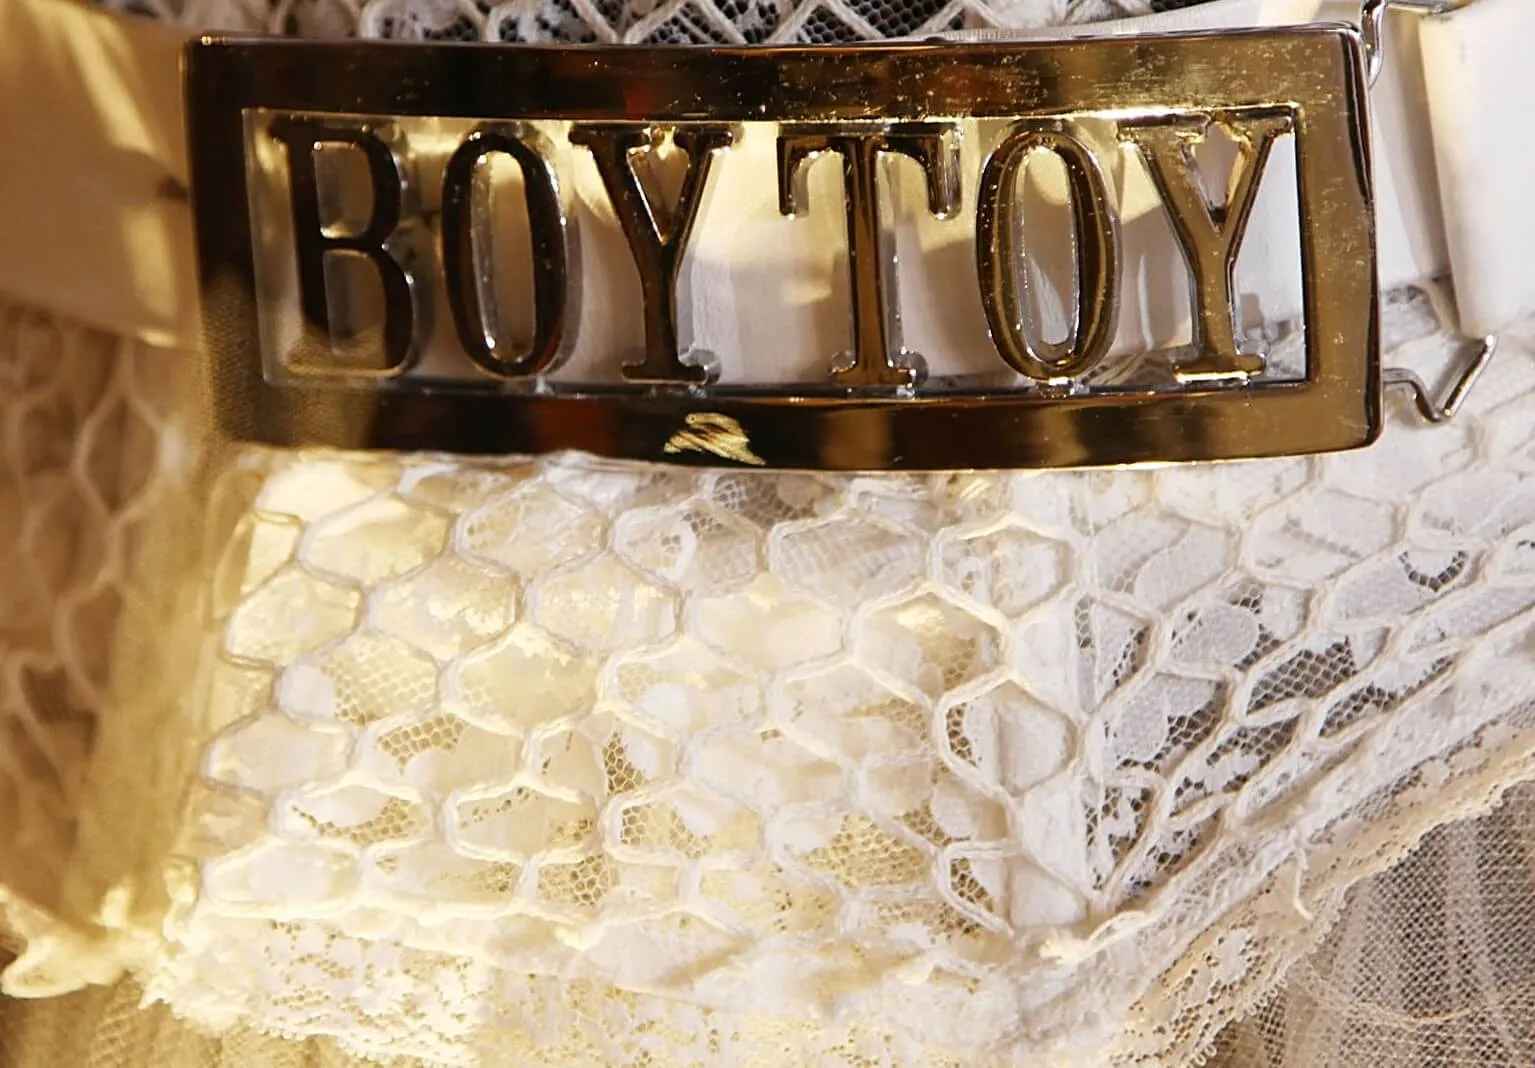 "Like a Virgin" singer Madonna's famous "boy toy" belt buckle